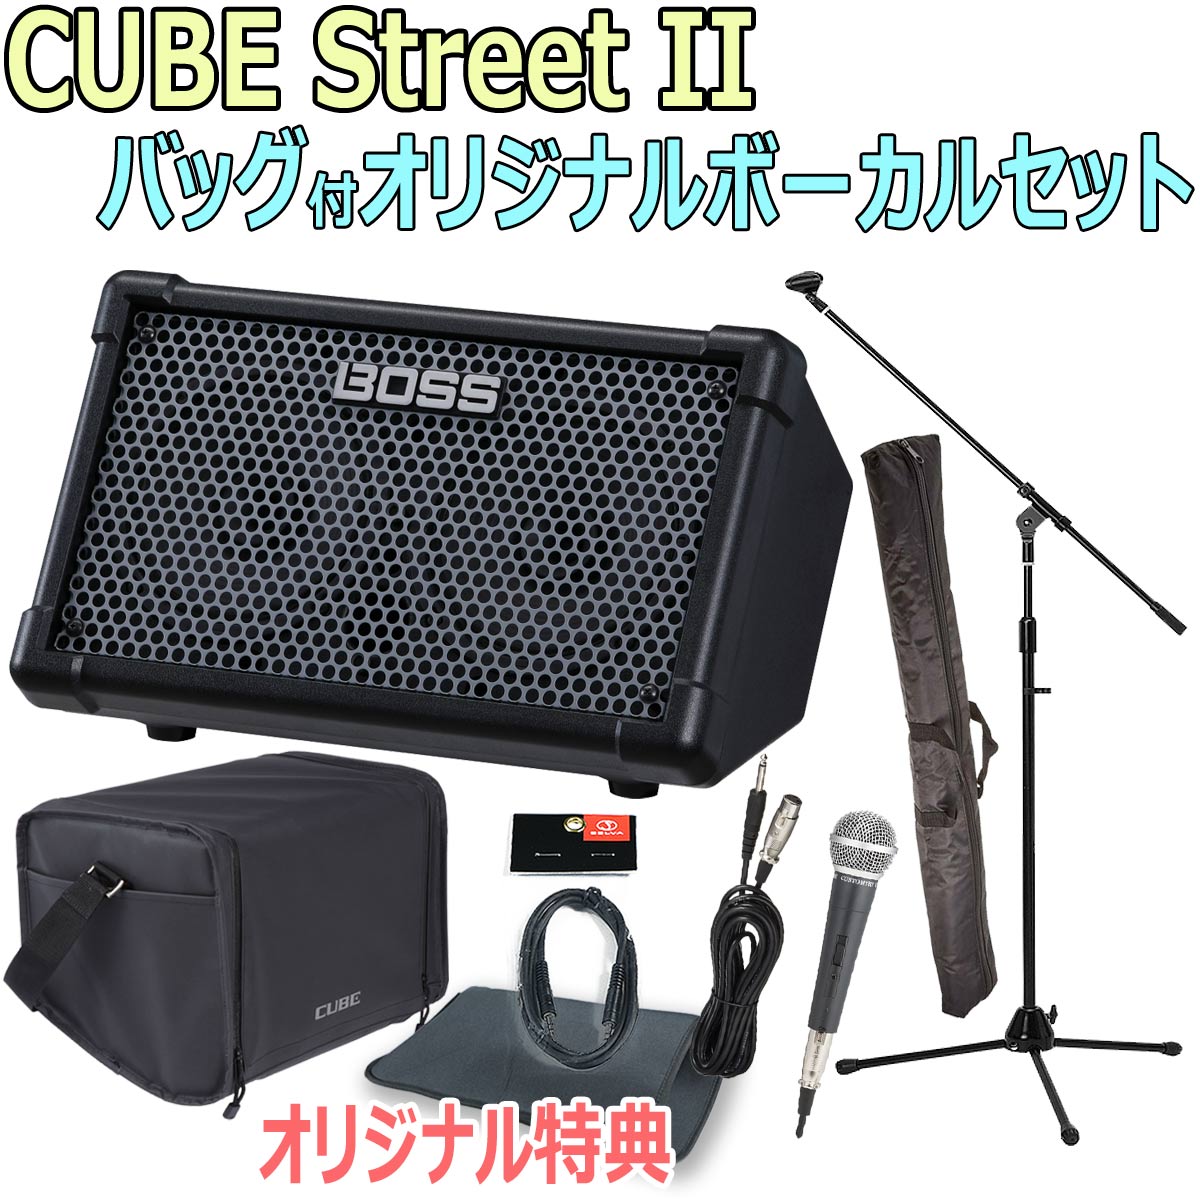 Roland / CUBE Street II Black -純正バッグ付オリジナルボーカル